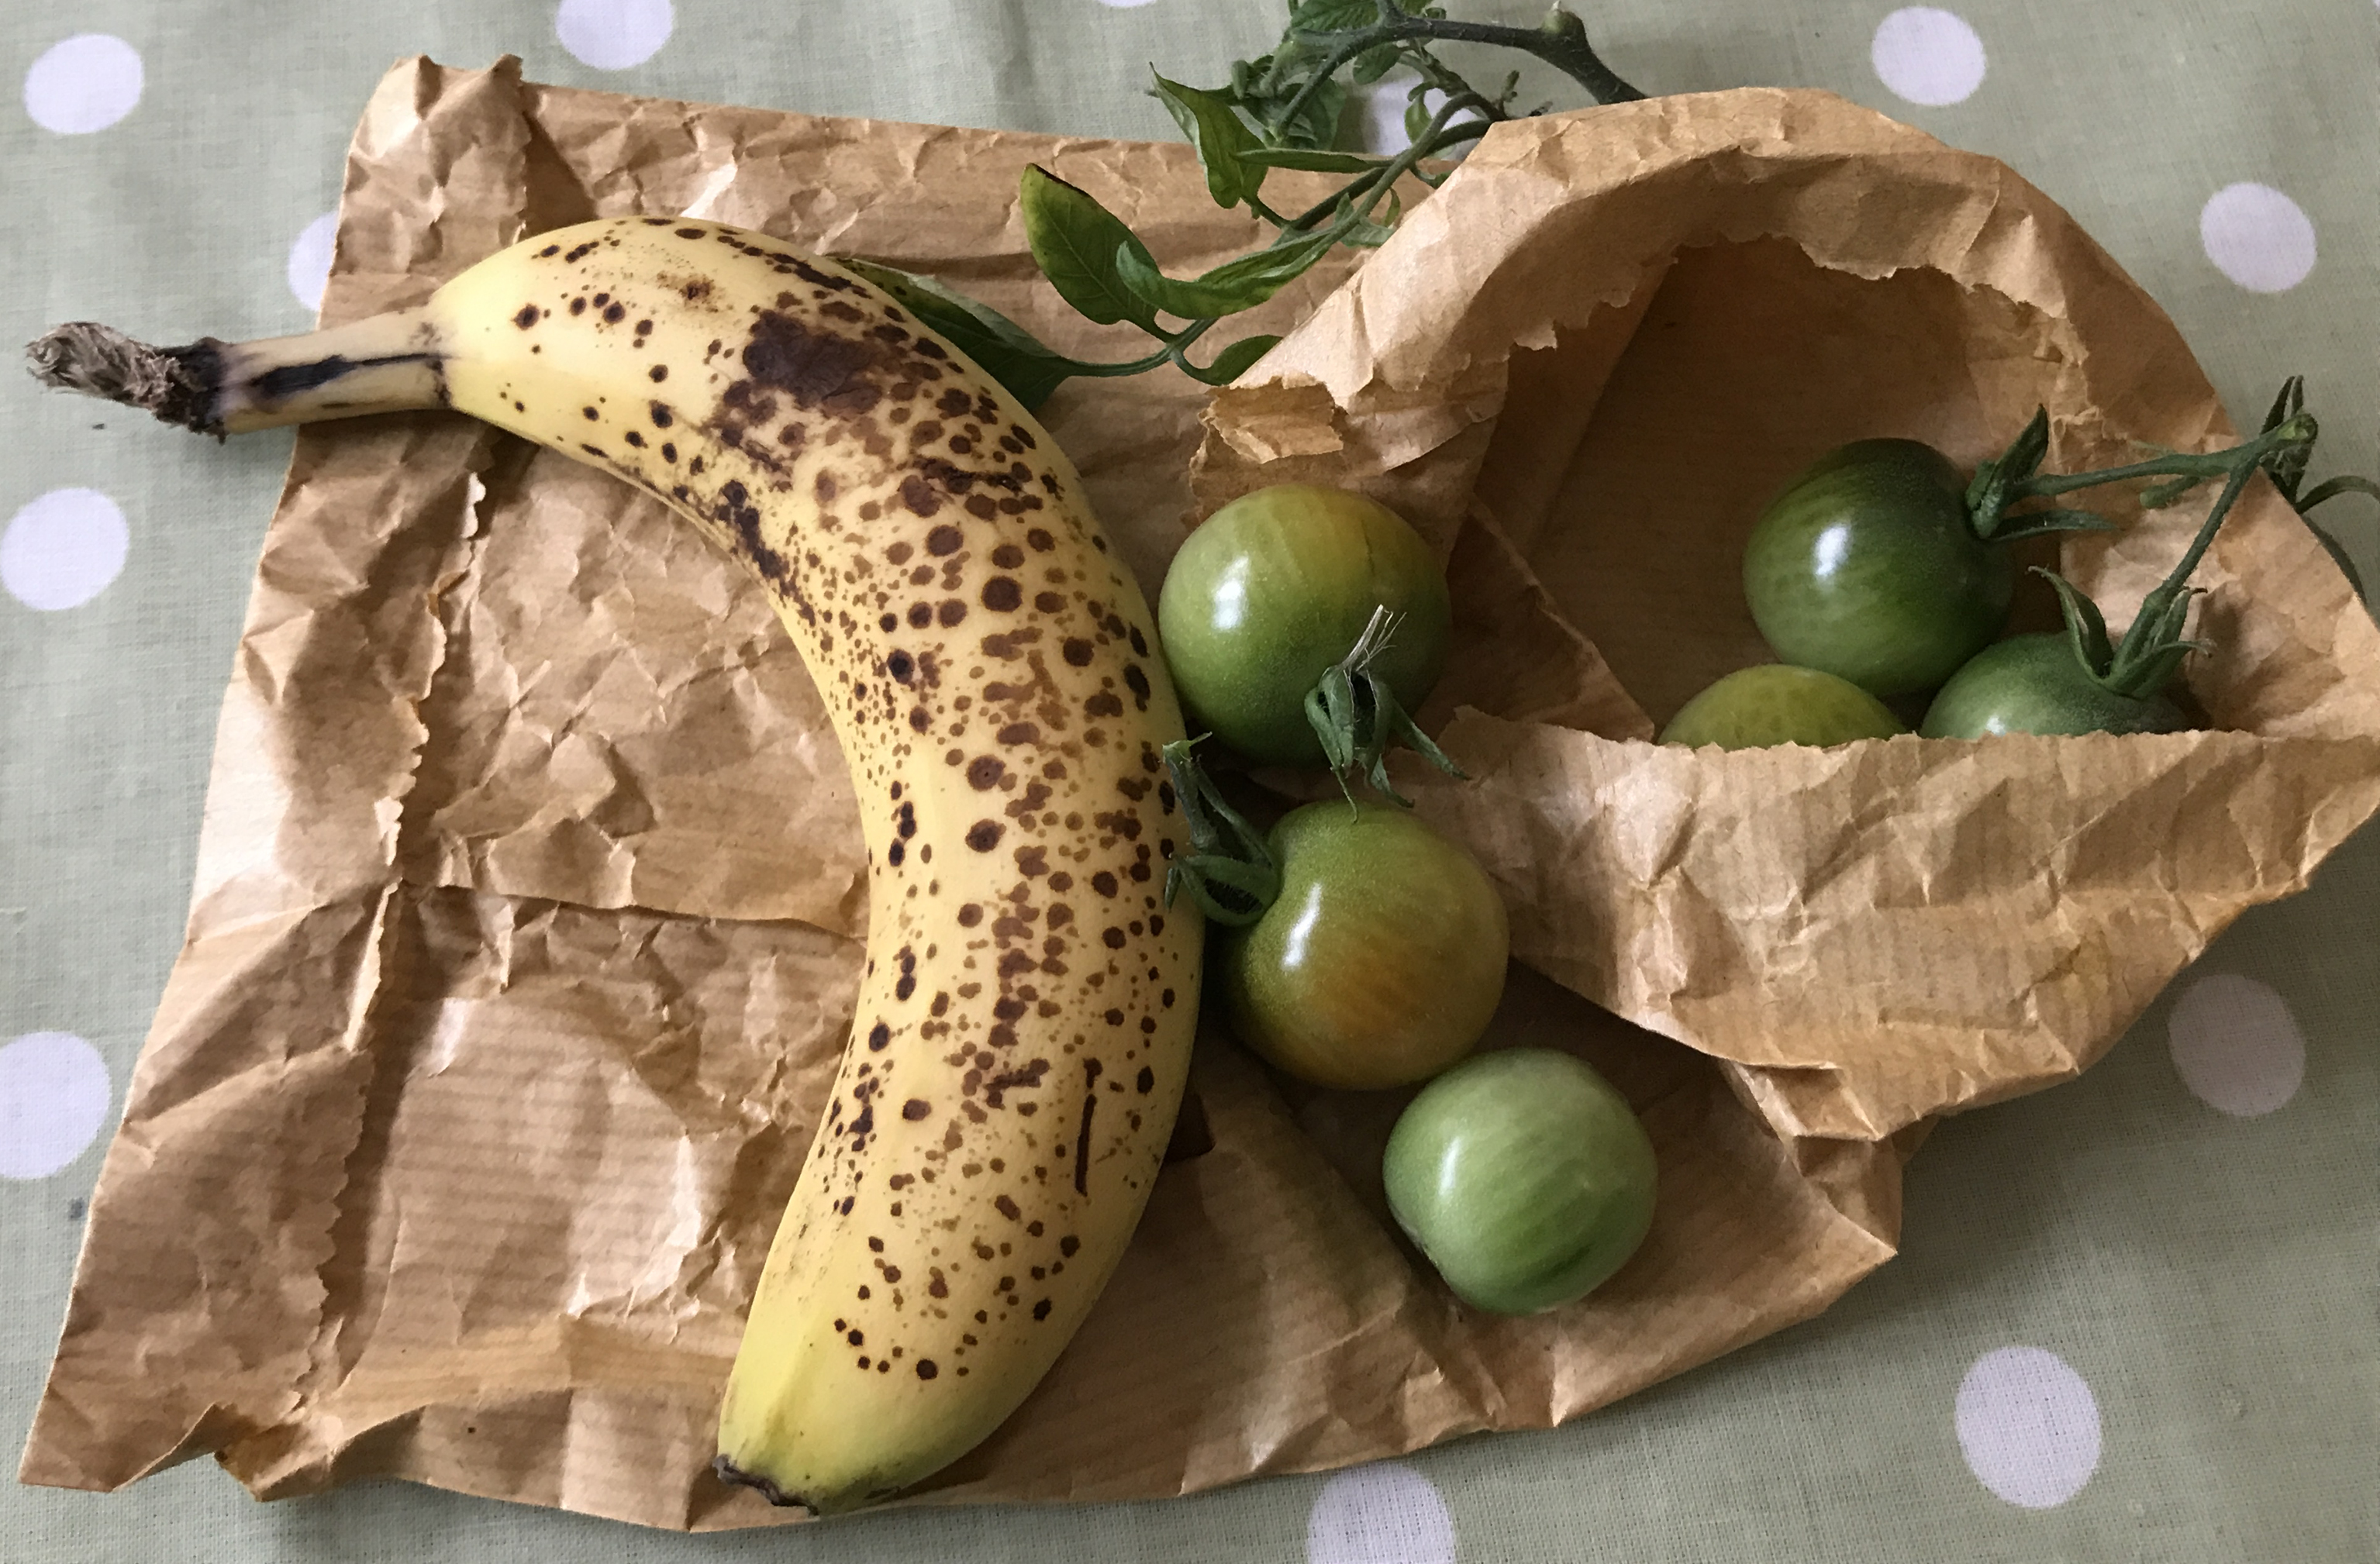 Bananas alongside a brown paper bag and green tomatoes (Hannah Stephenson/PA)